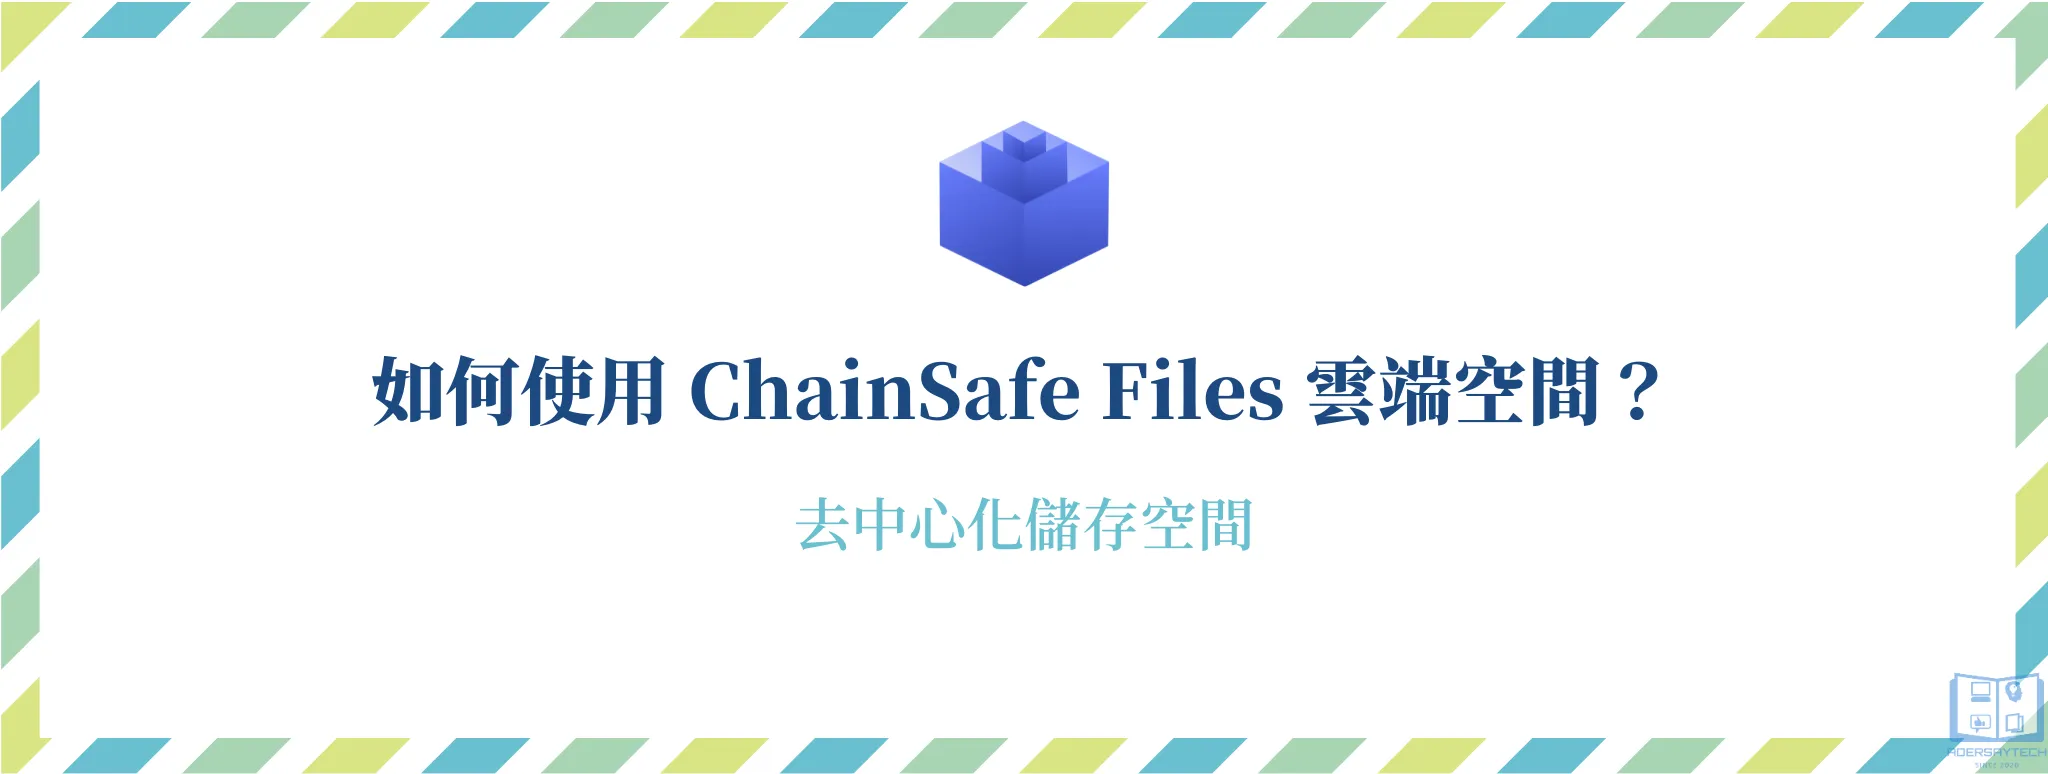 ChainSafe Files｜去中心化免費 20GB 雲端儲存空間 6